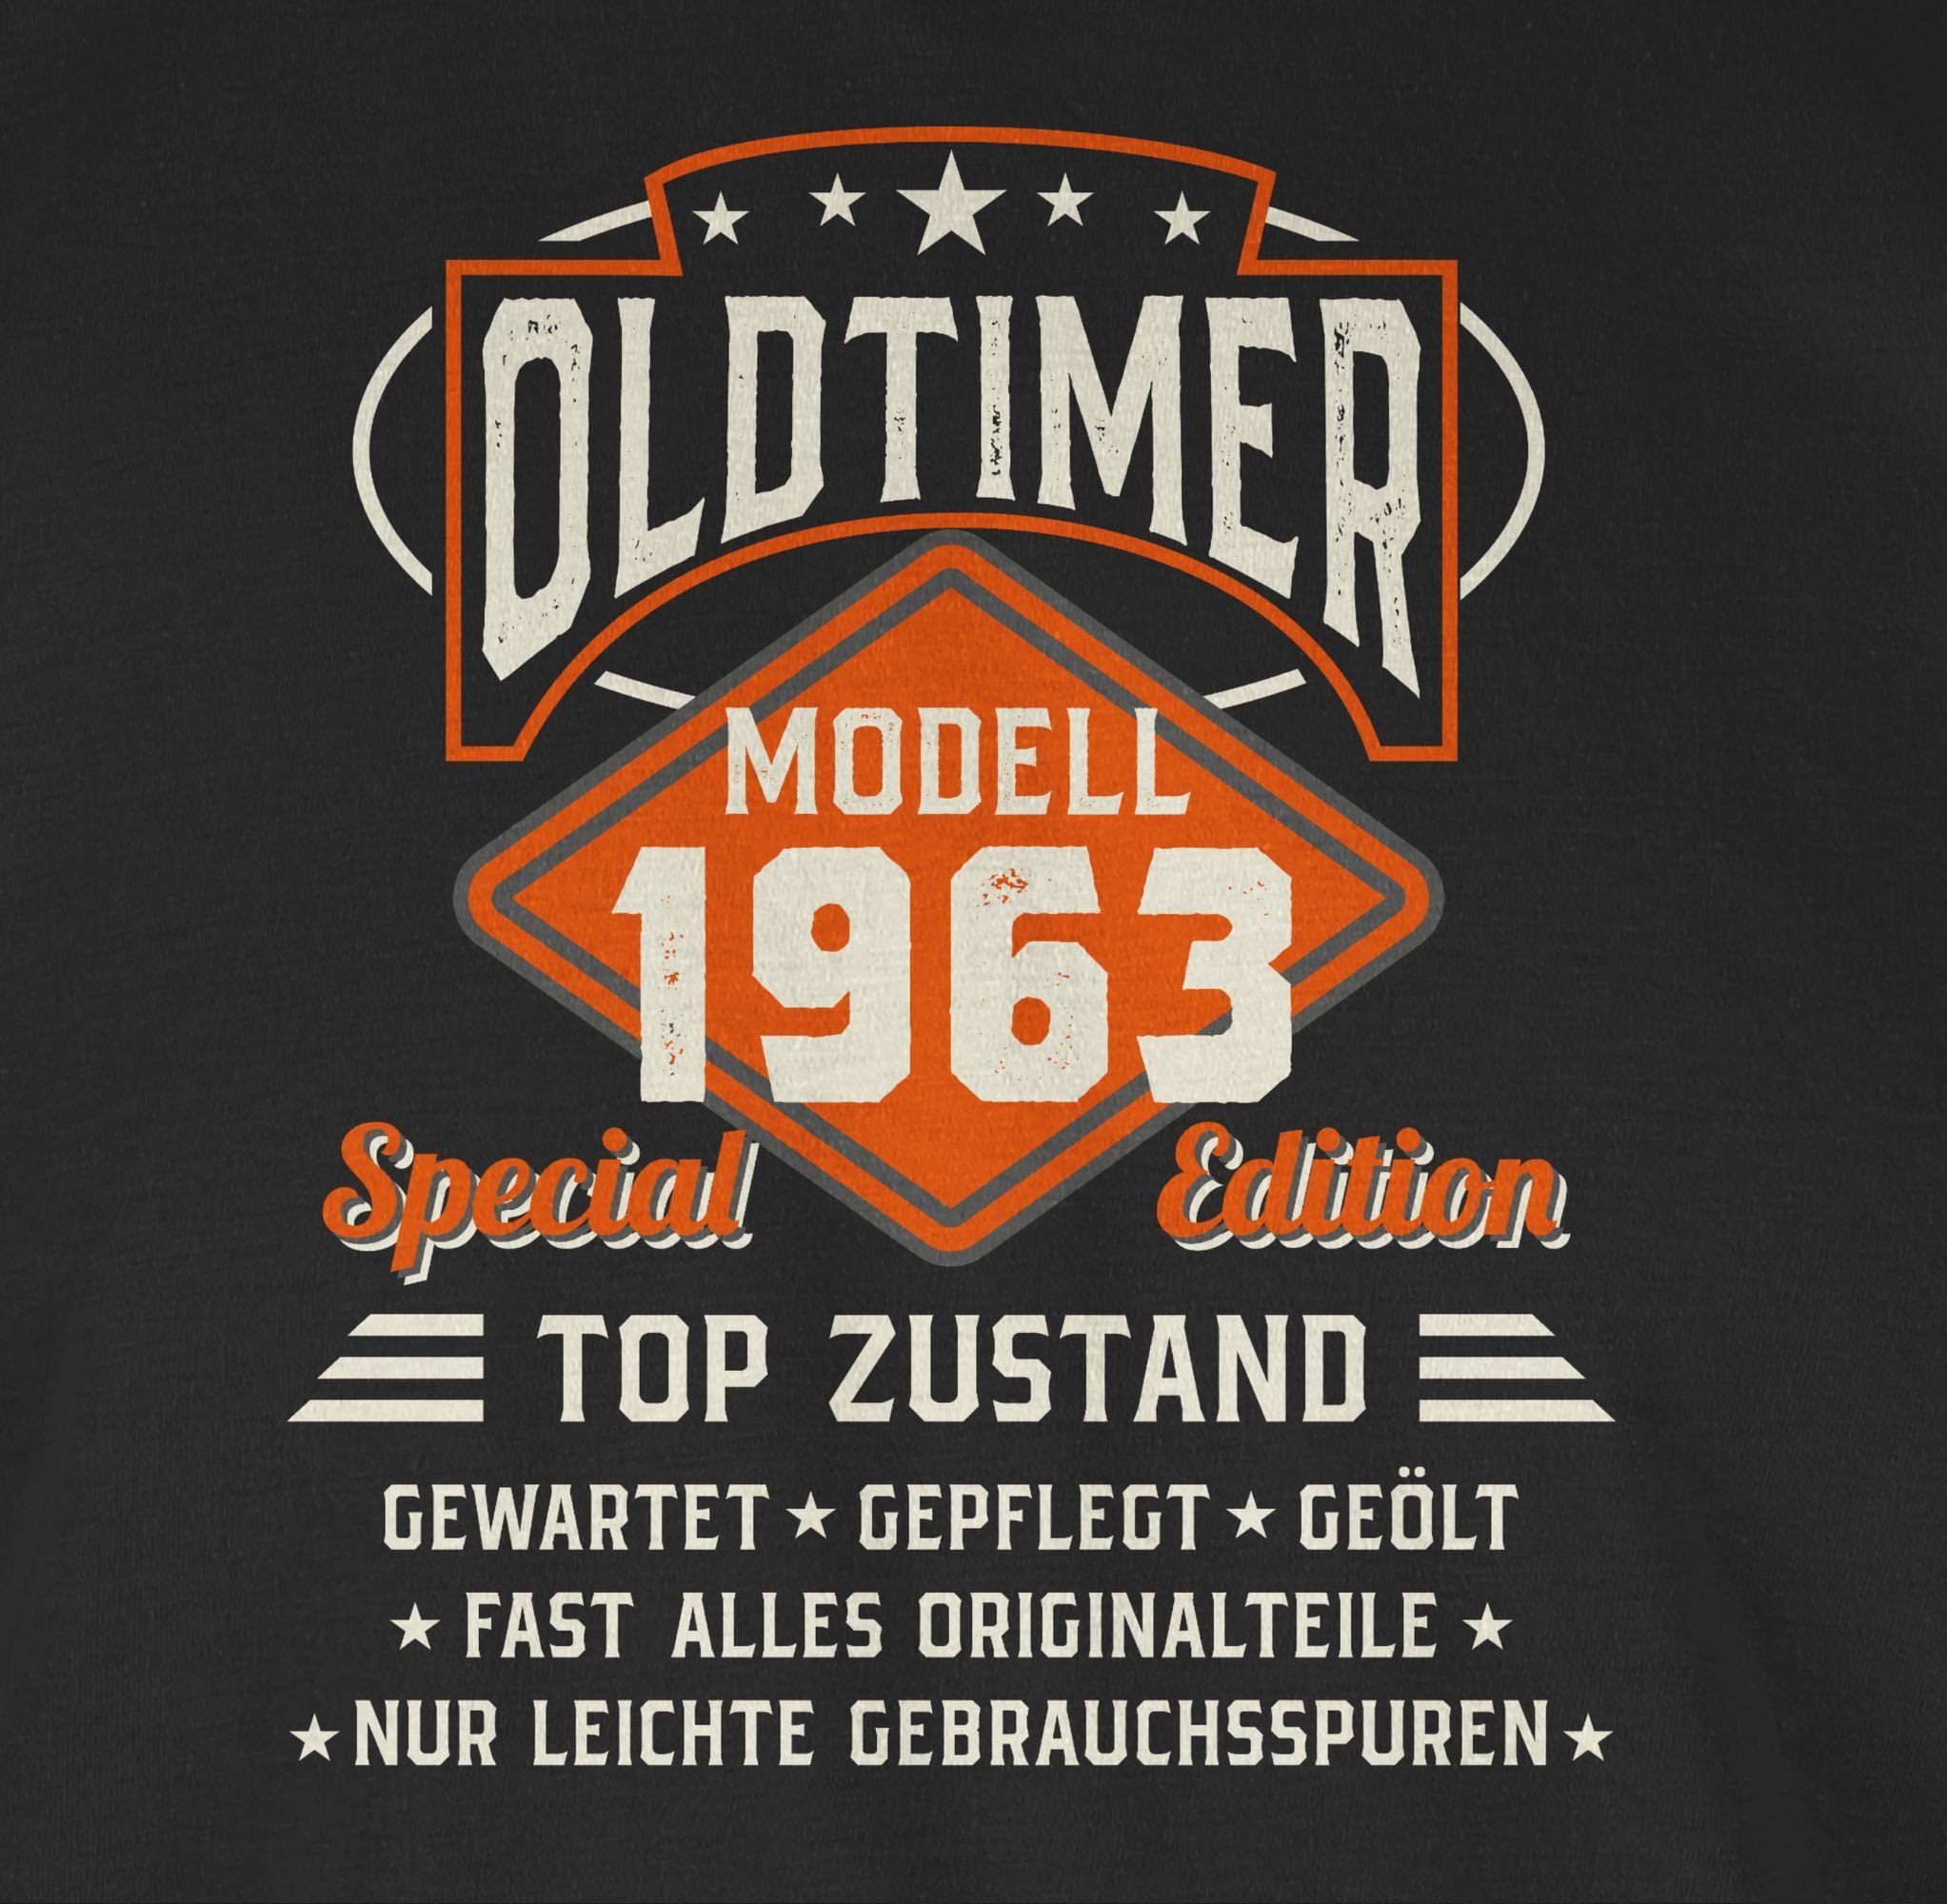 Shirtracer T-Shirt Oldtimer Modell 01 Schwarz 1963 Geburtstag 60